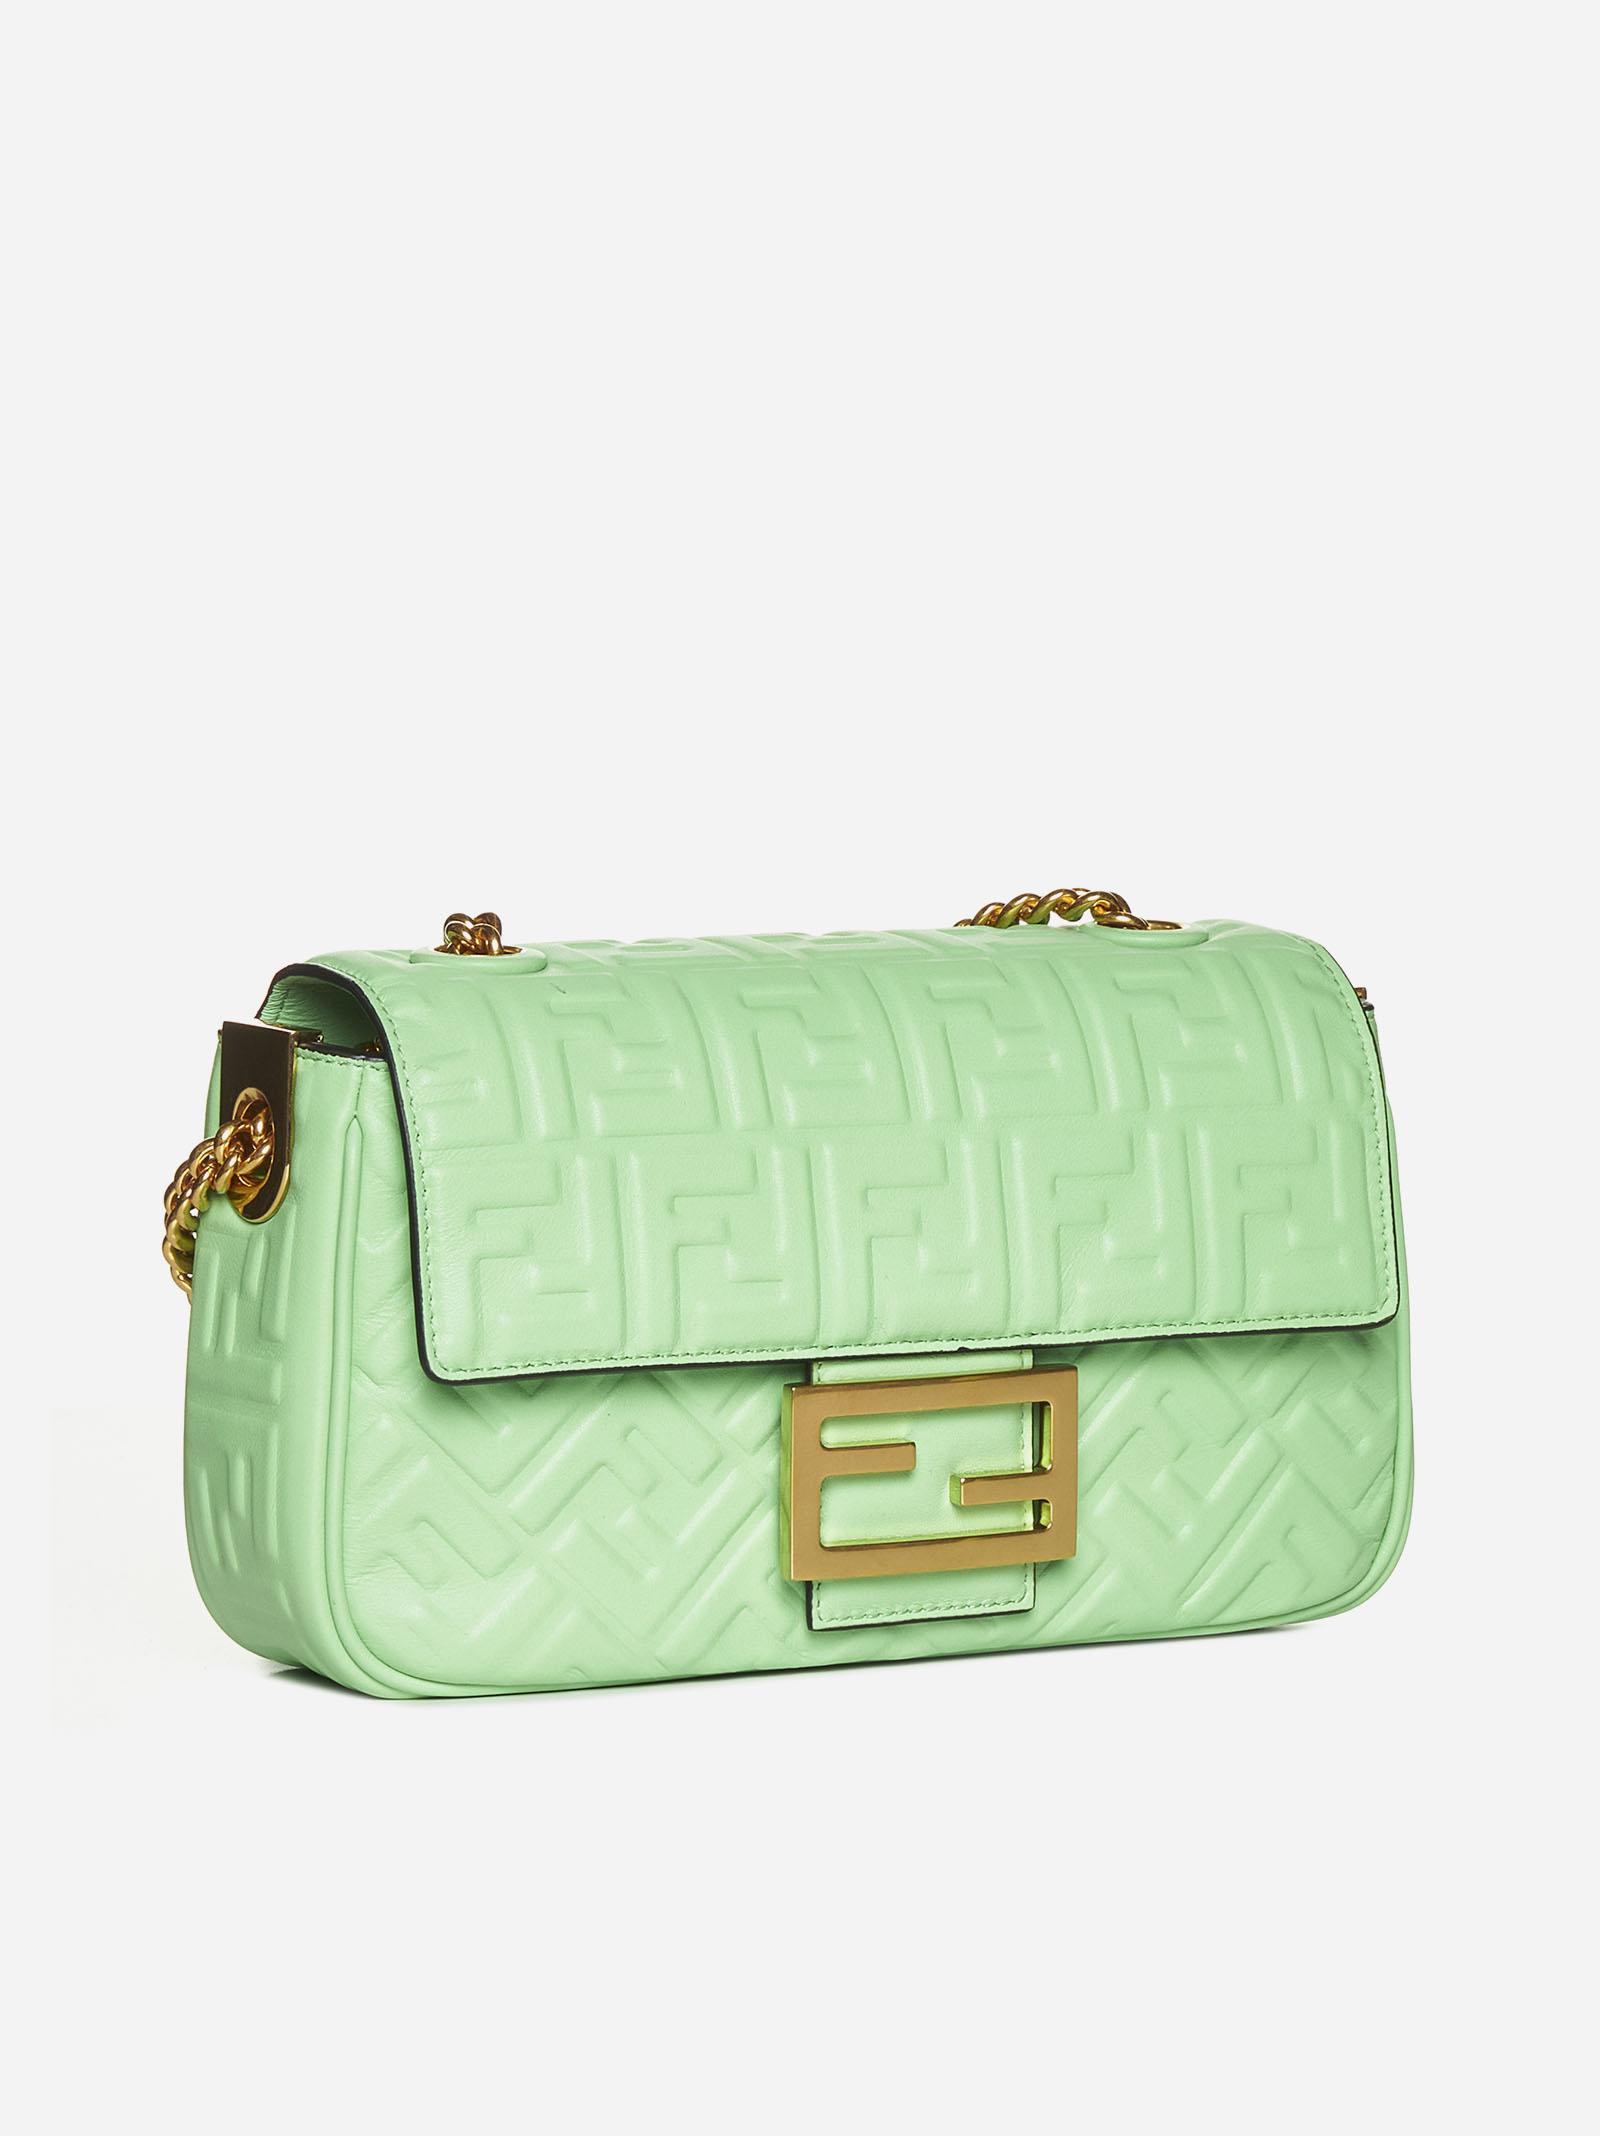 Fendi Baguette Chain Ff Leather Midi Bag in Green | Lyst